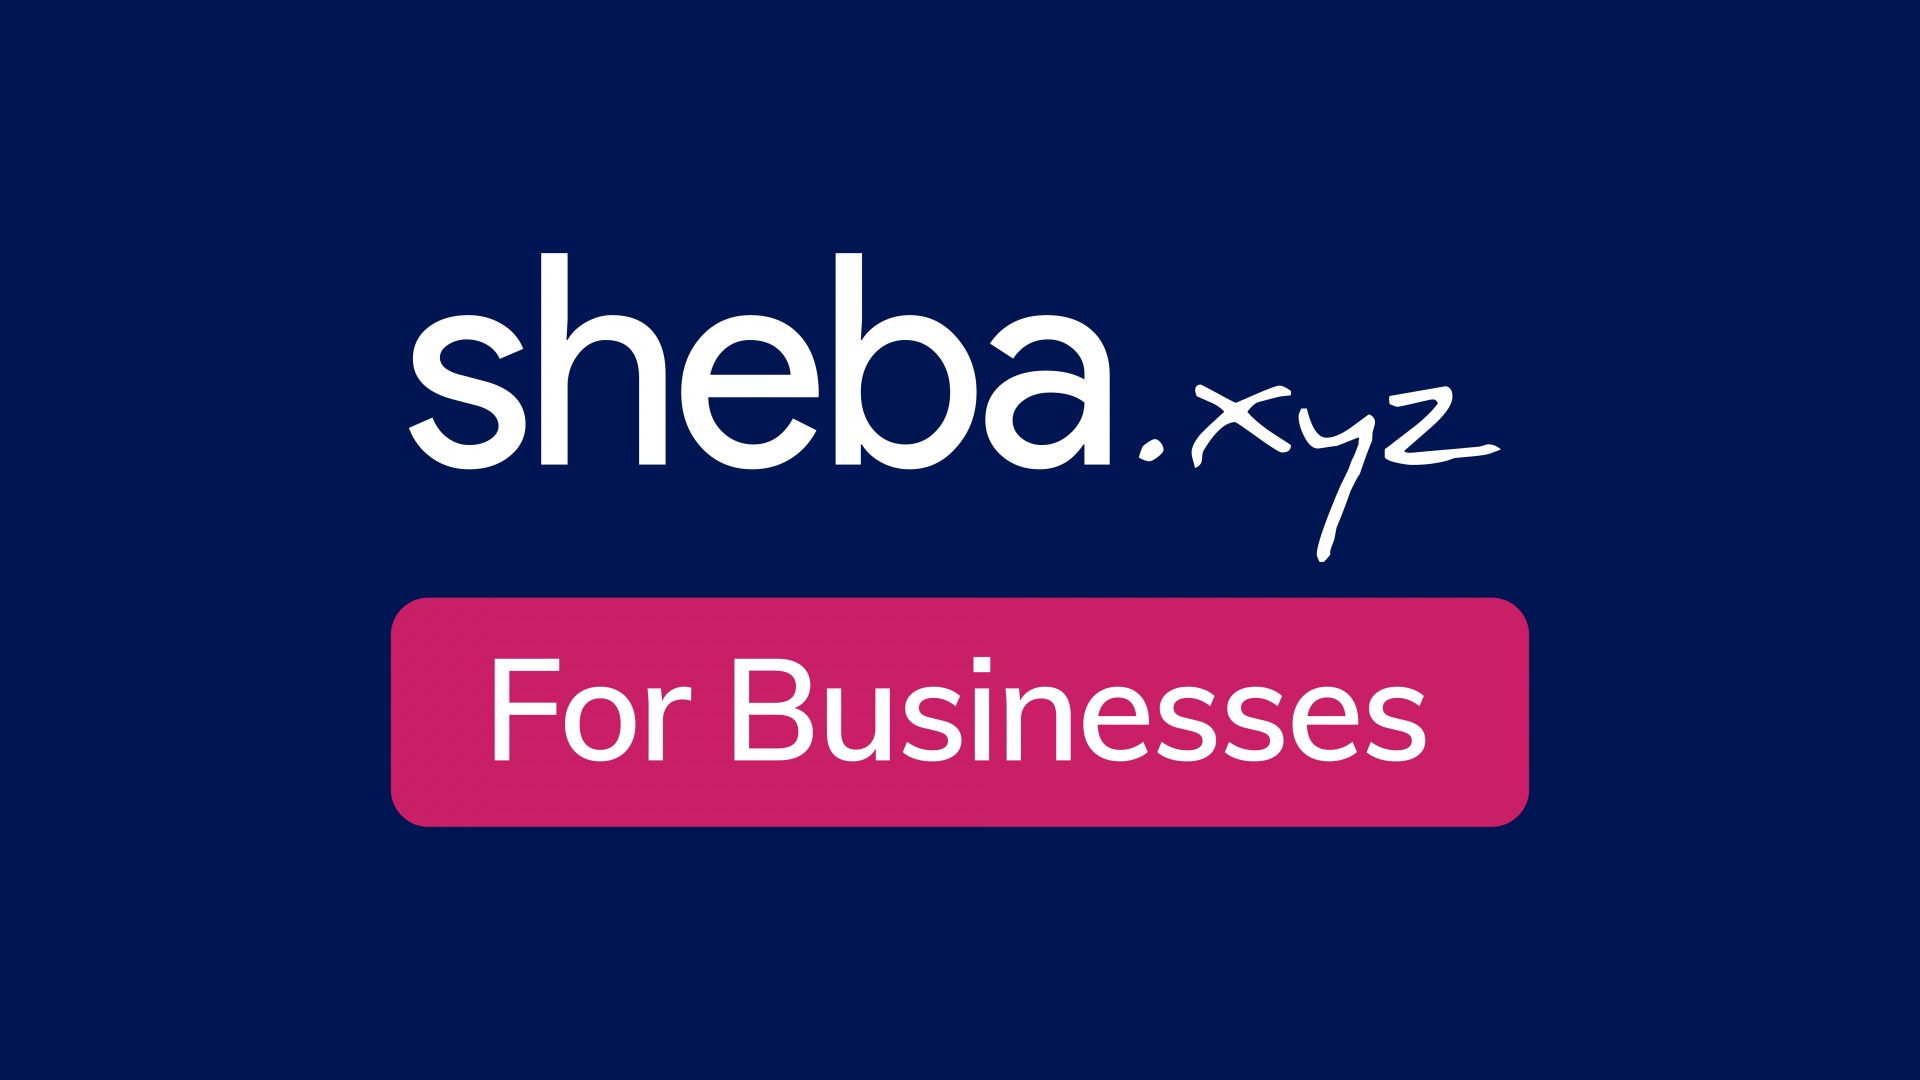 Sheba.xyz - ঘরোয়া সার্ভিসের পরিধি প্রসারিত করে এখন ব্যবসায়িক আঙিনায় -  Sheba Blog